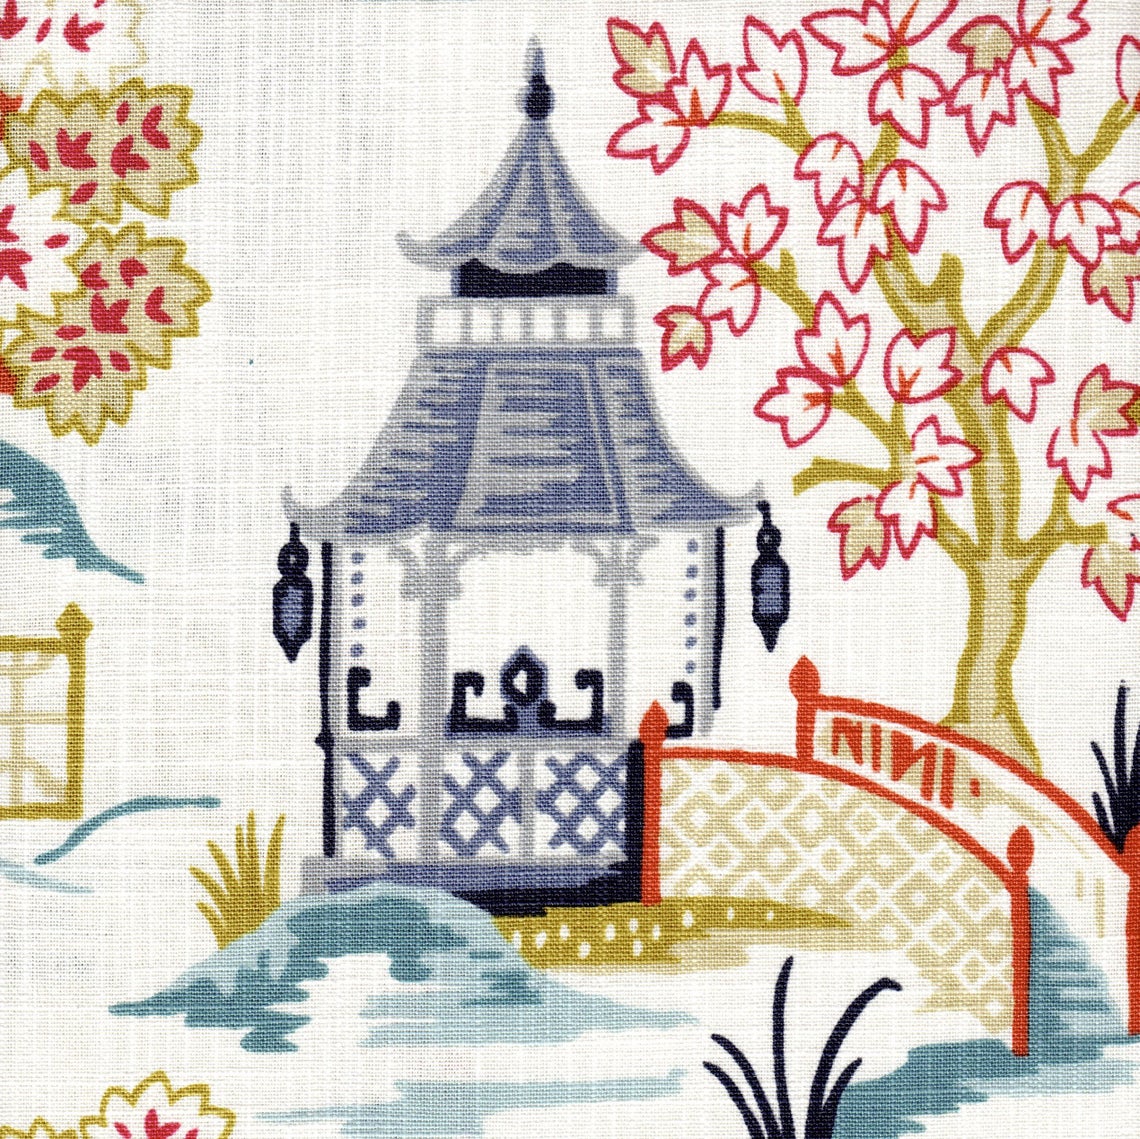 round tablecloth in shoji summer oriental toile, multicolor chinoiserie